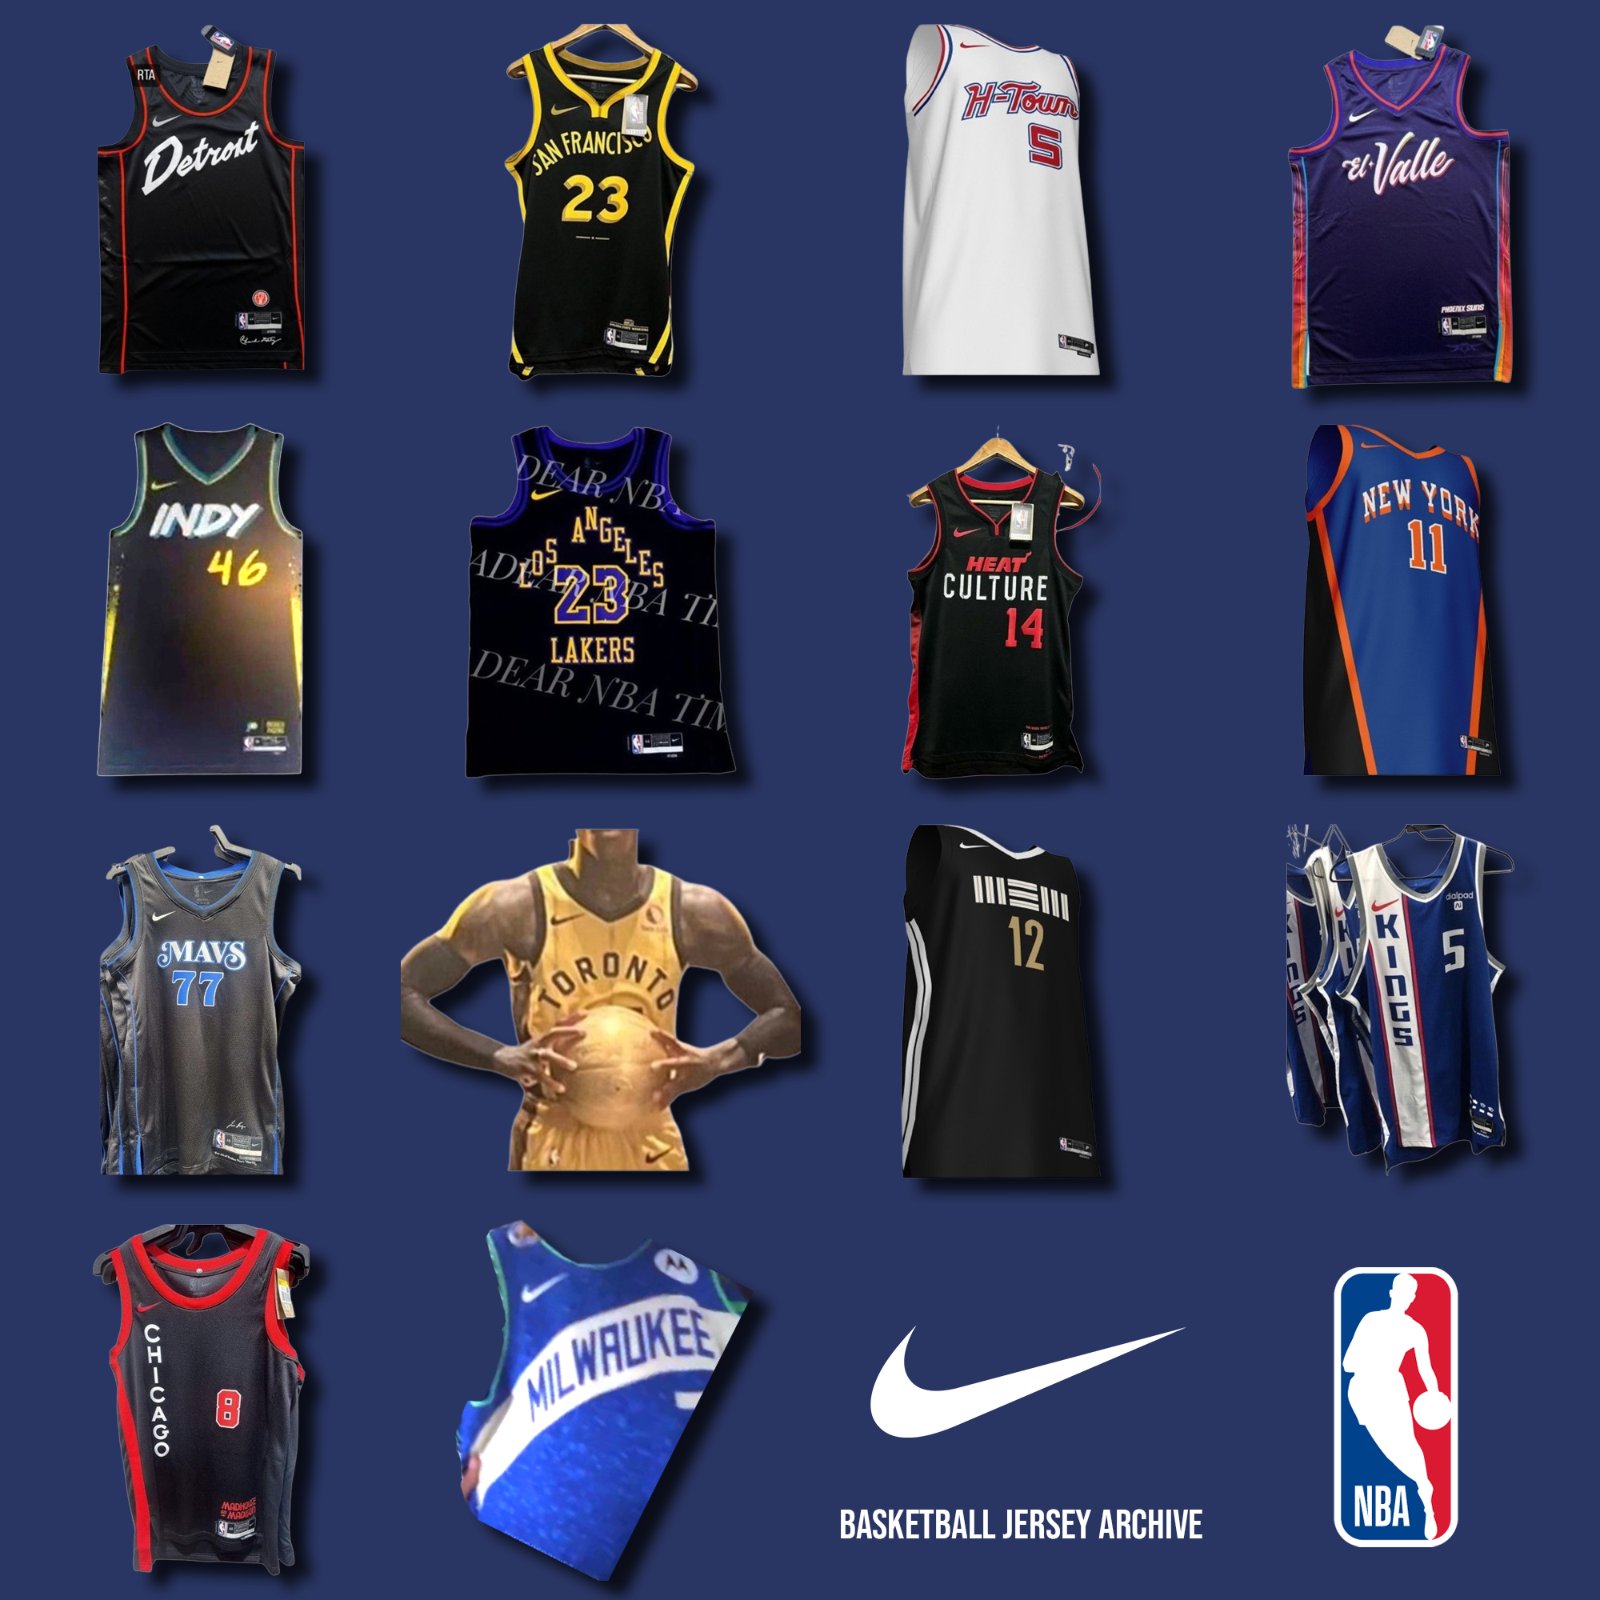 Nike Boston Celtics & New York Knicks 23-24 City Edition Jerseys Leaked